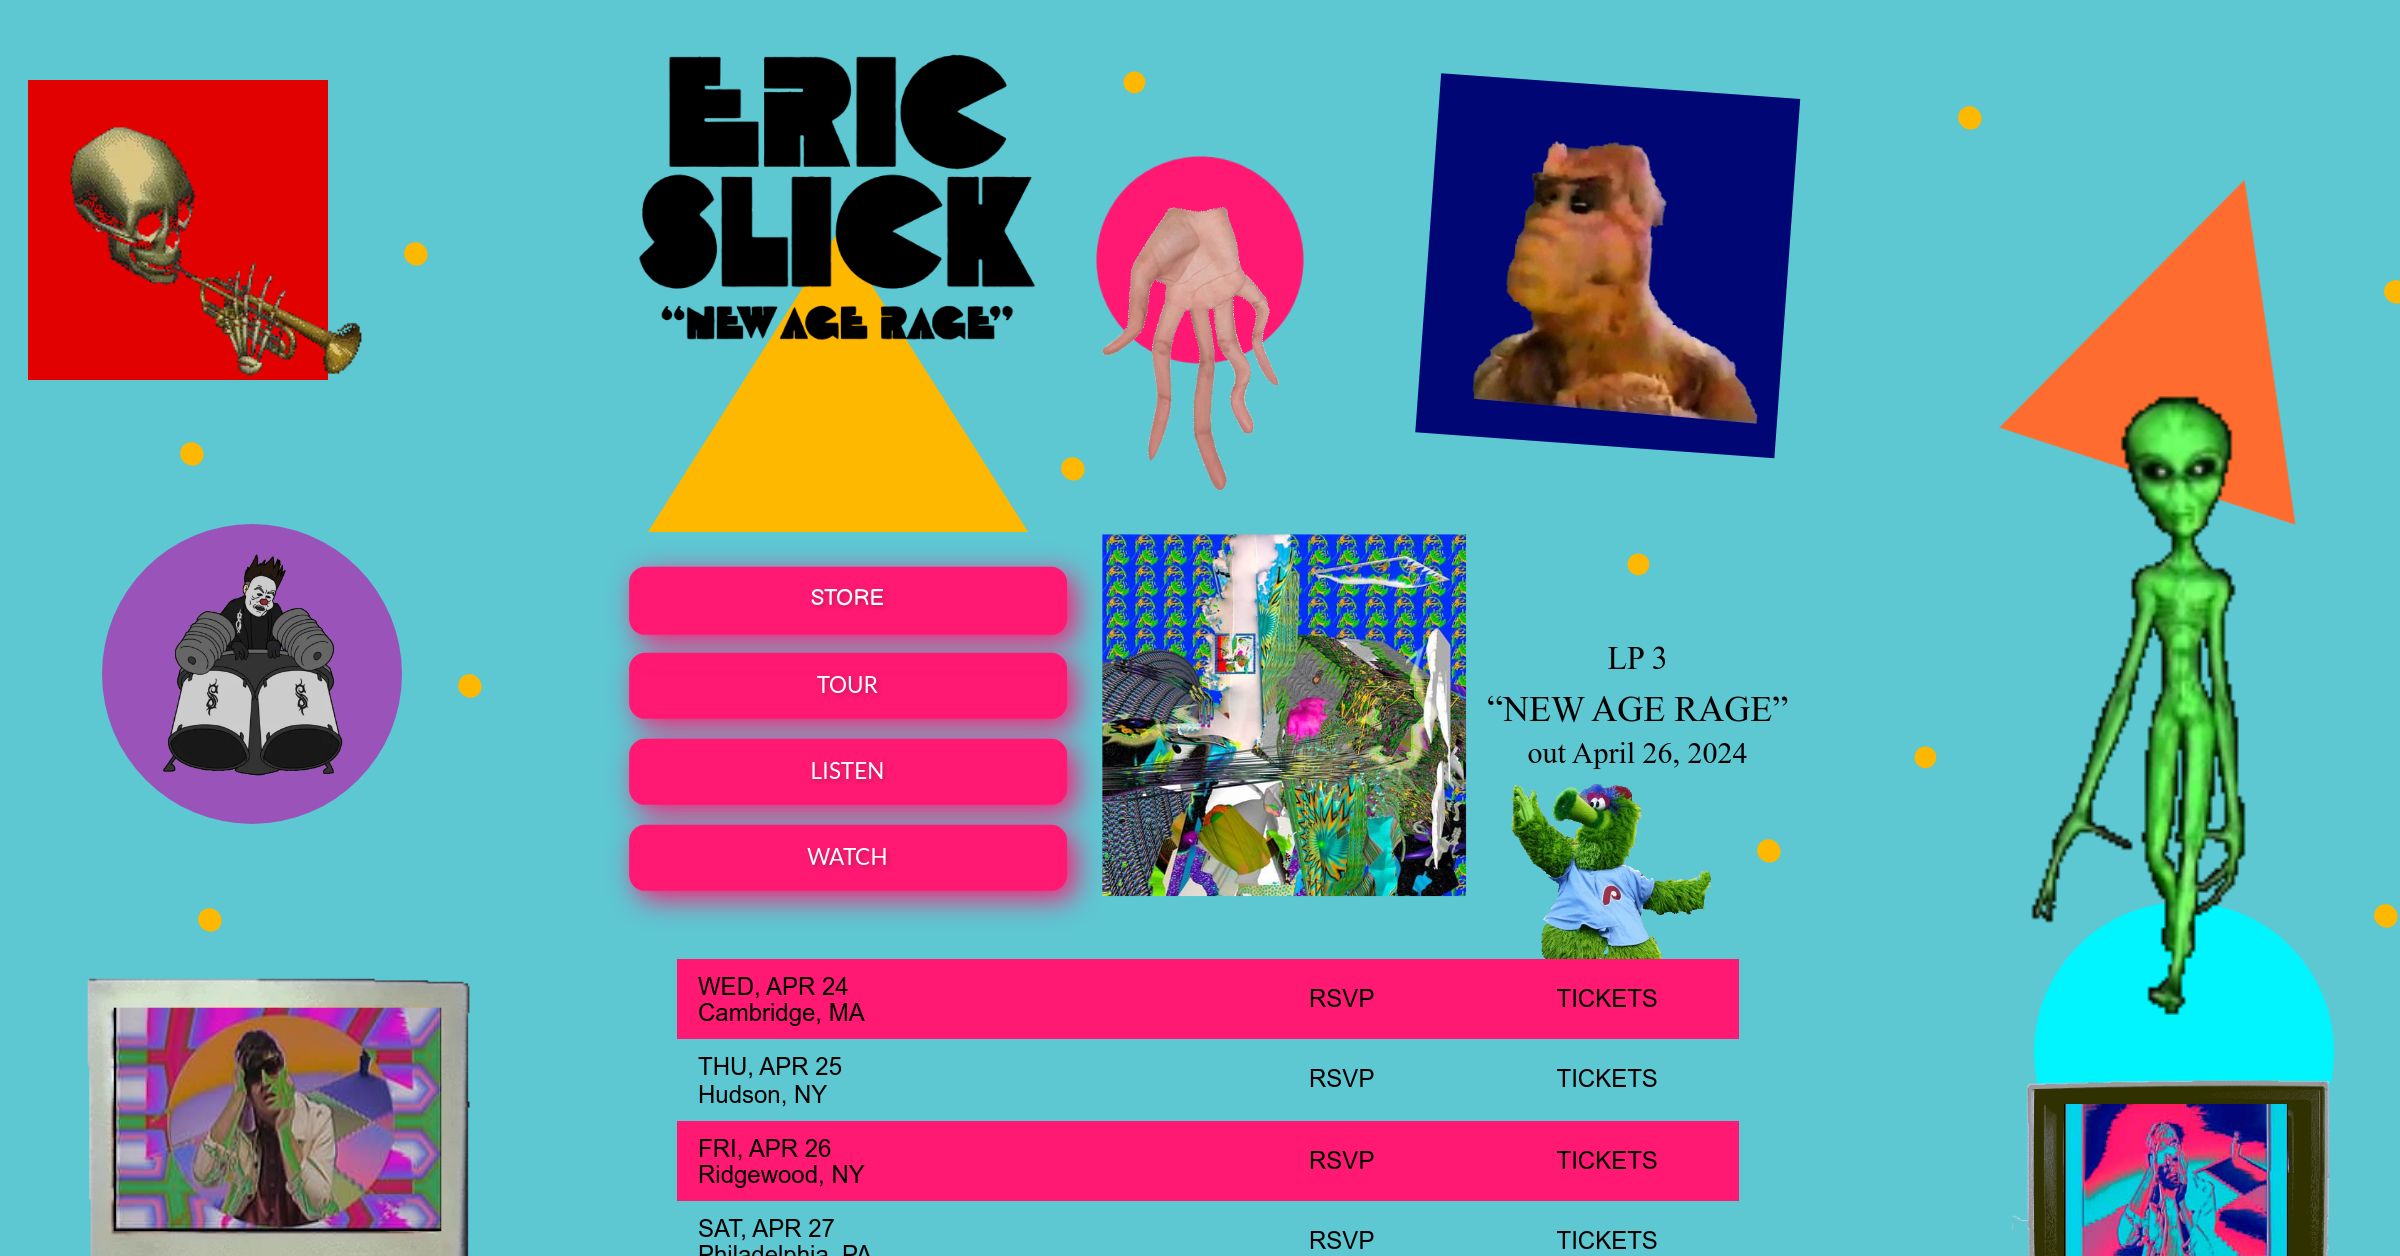 (c) Ericslick.com